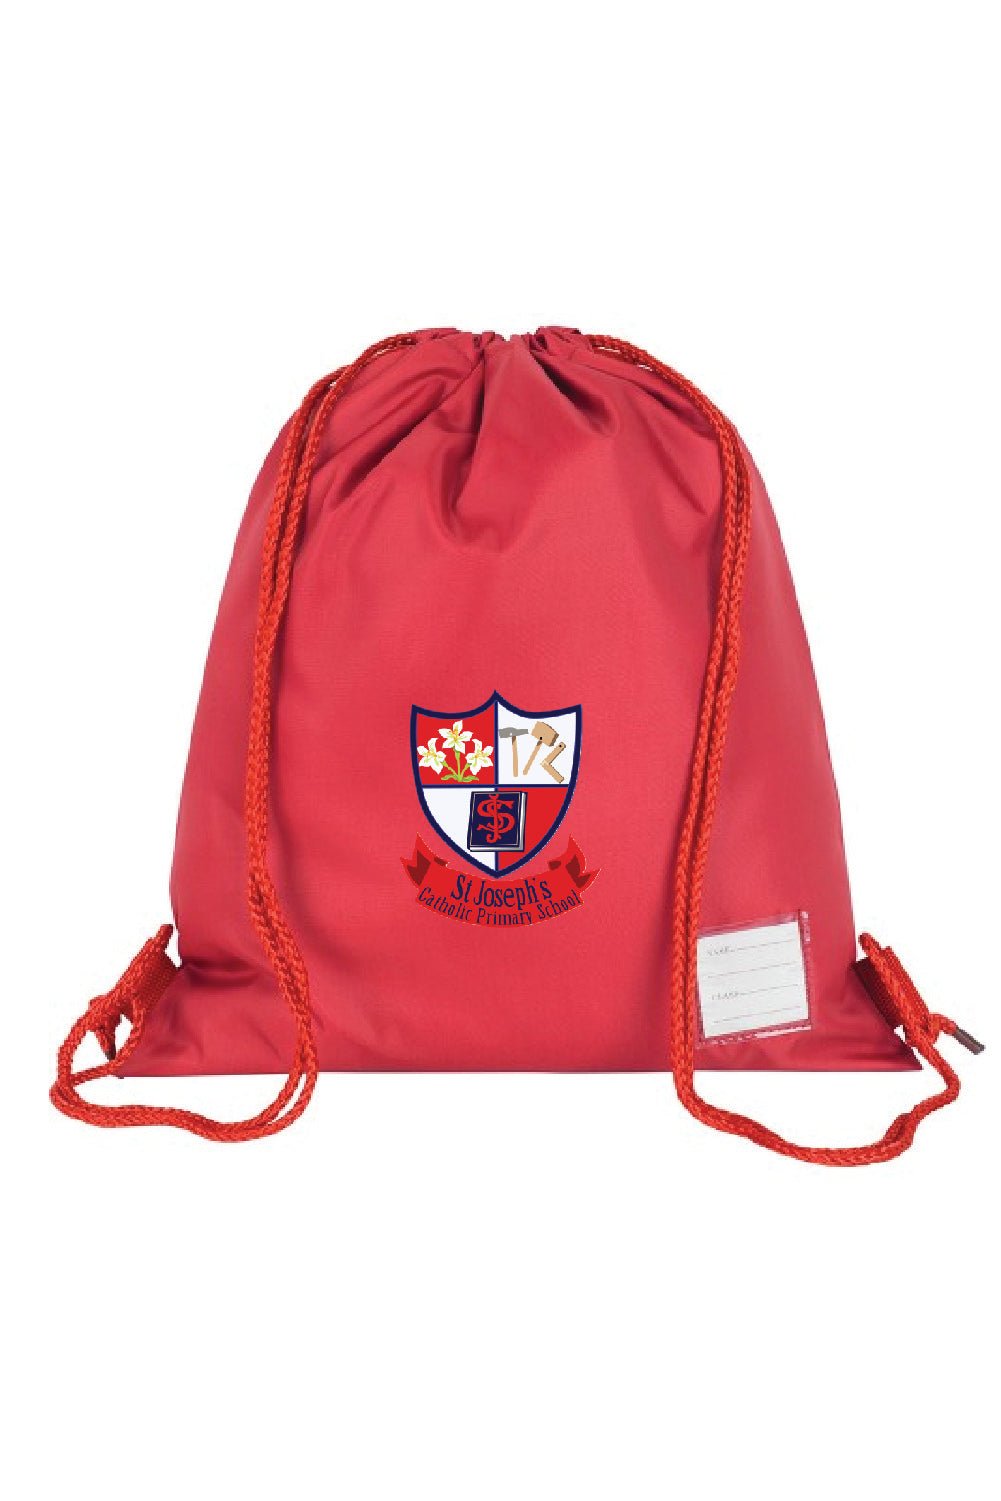 S.J PE Bag with personalisation - Uniformwise Schoolwear